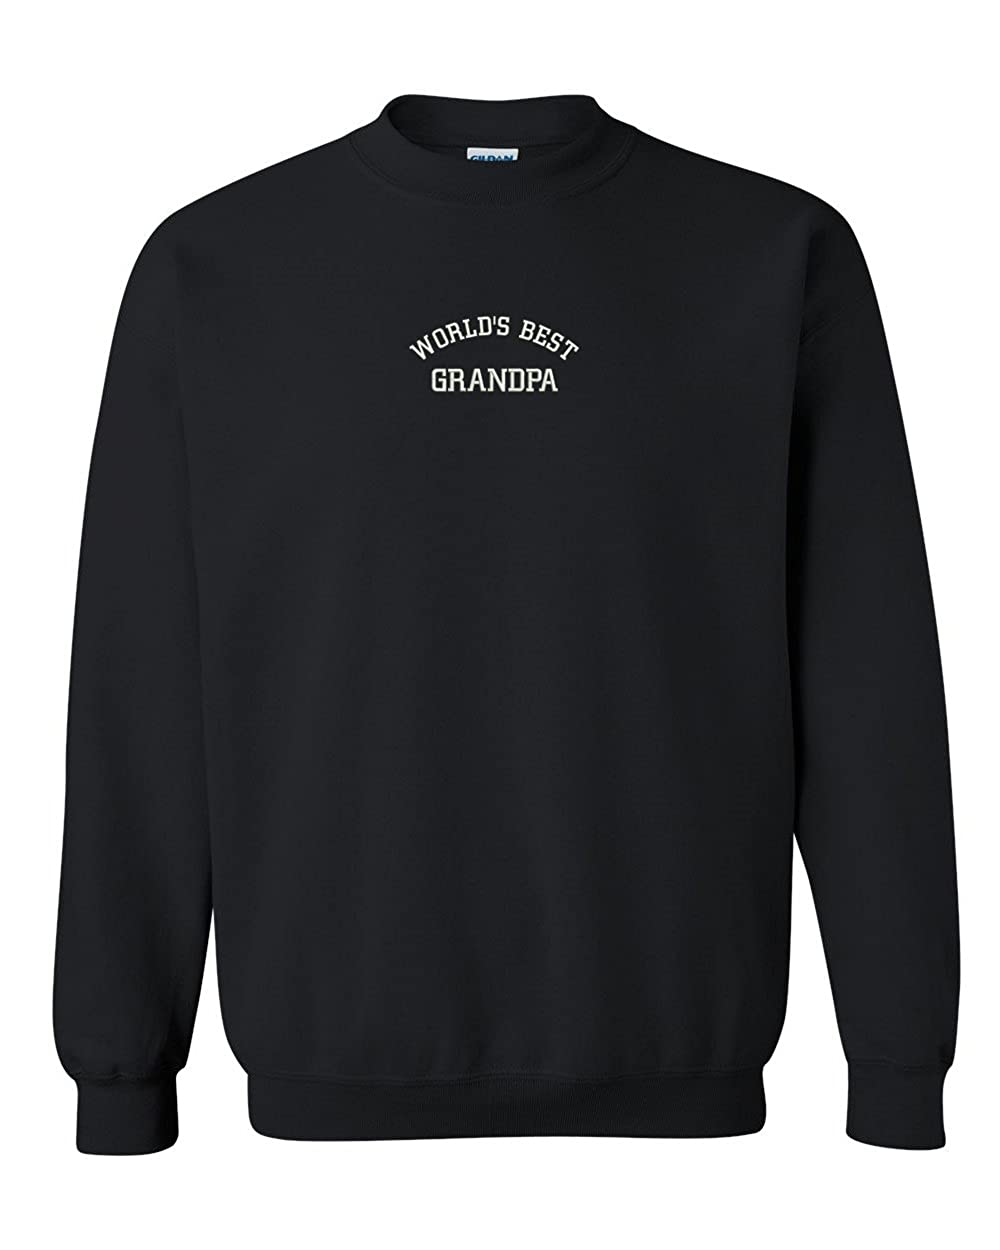 Trendy Apparel Shop World's Best Grandpa Embroidered Crewneck Sweatshirt